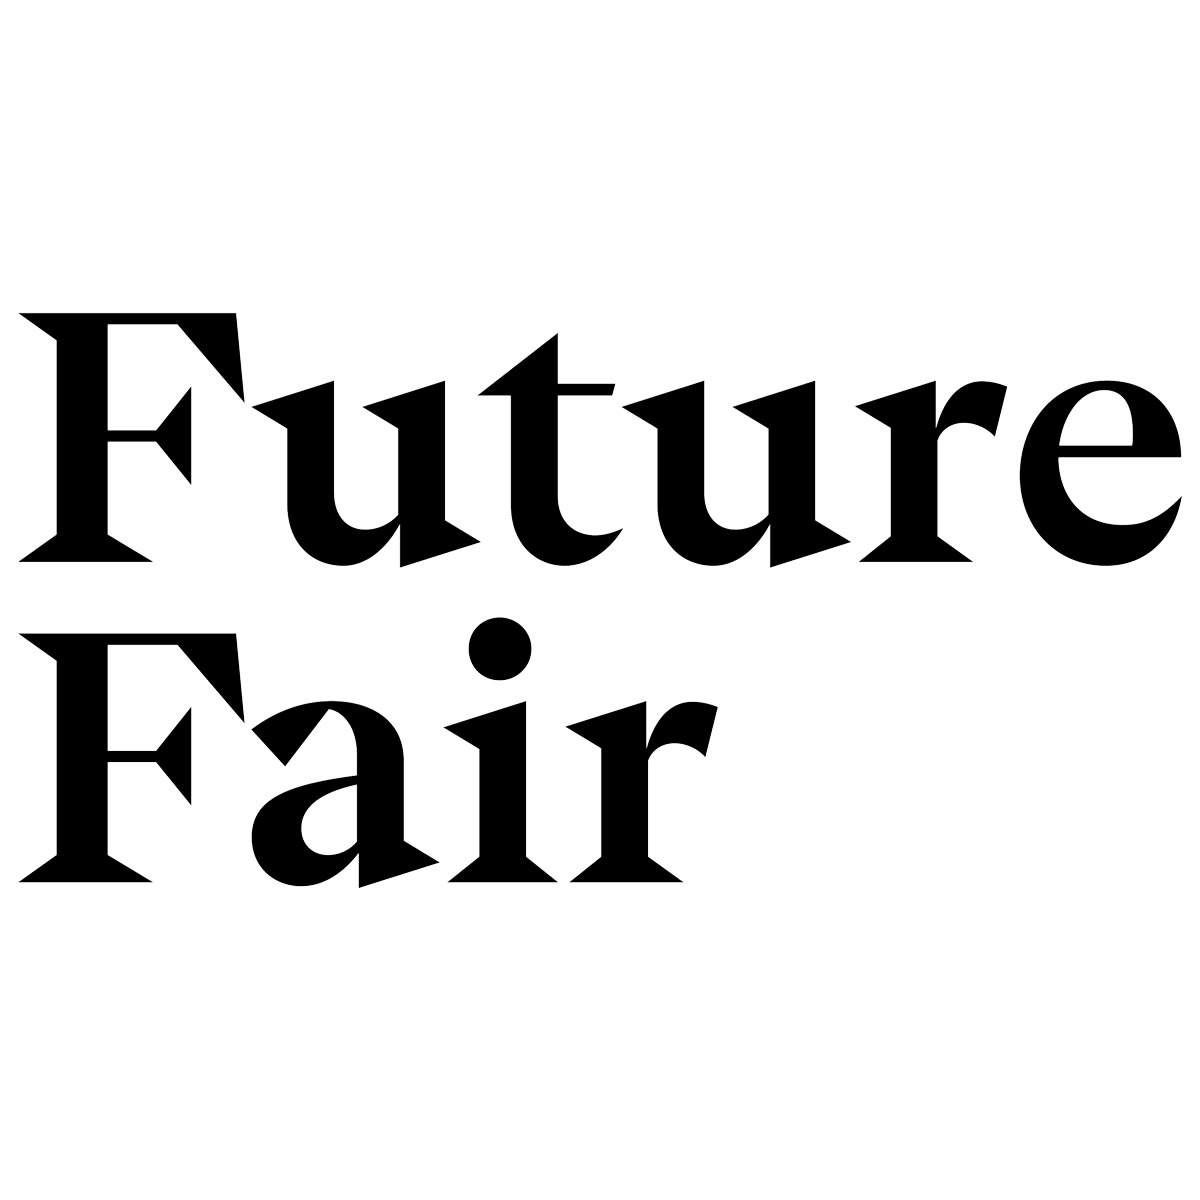 Future fair written in black text on white background